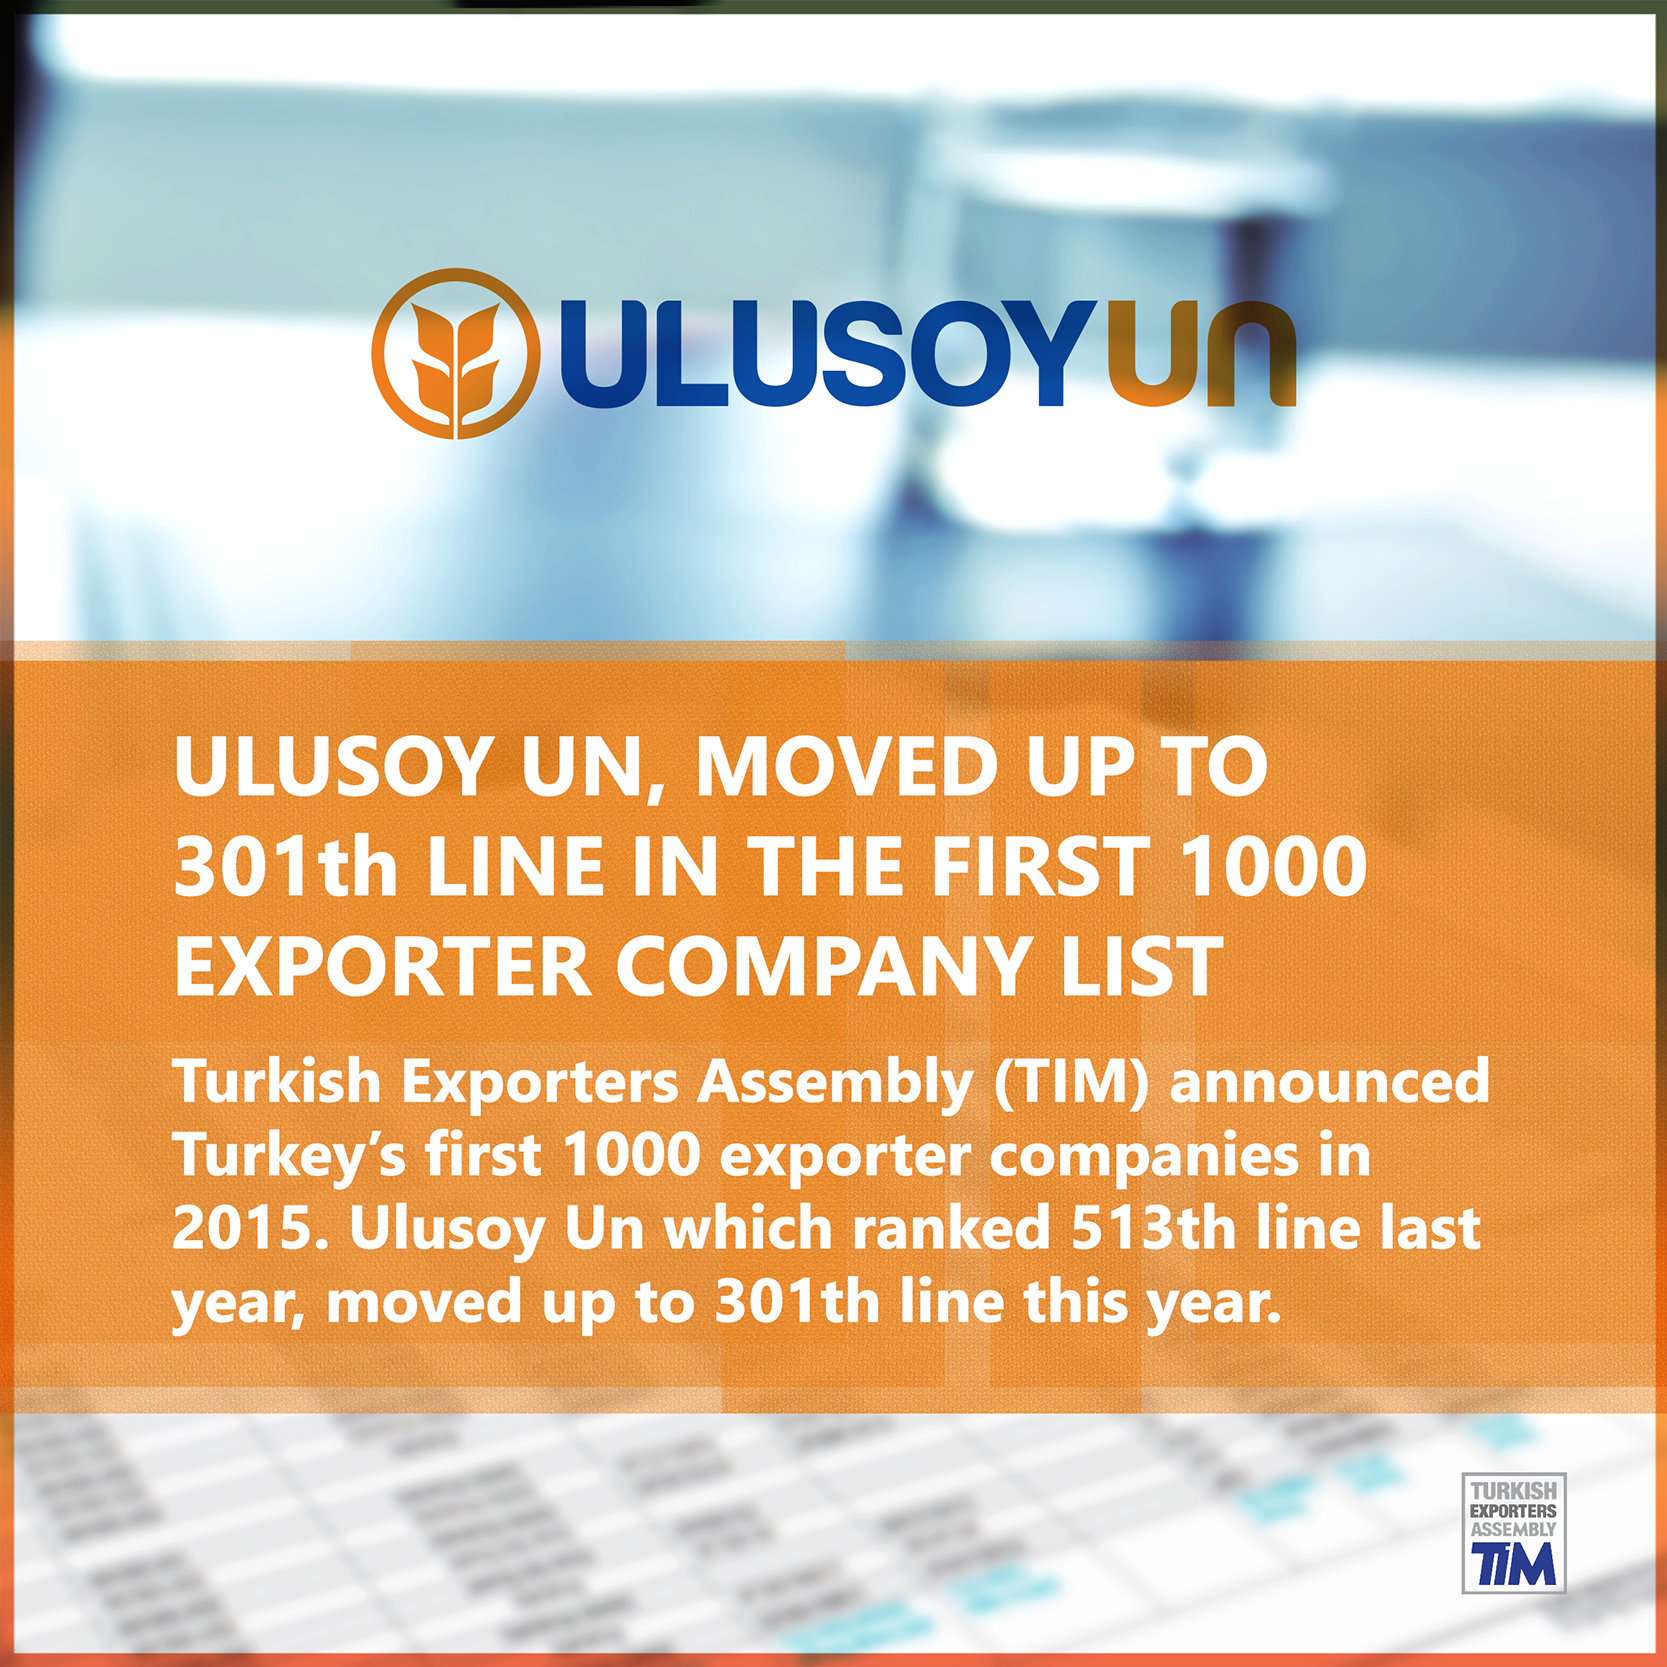 Ulusoy Un, export, TIM, list, rank